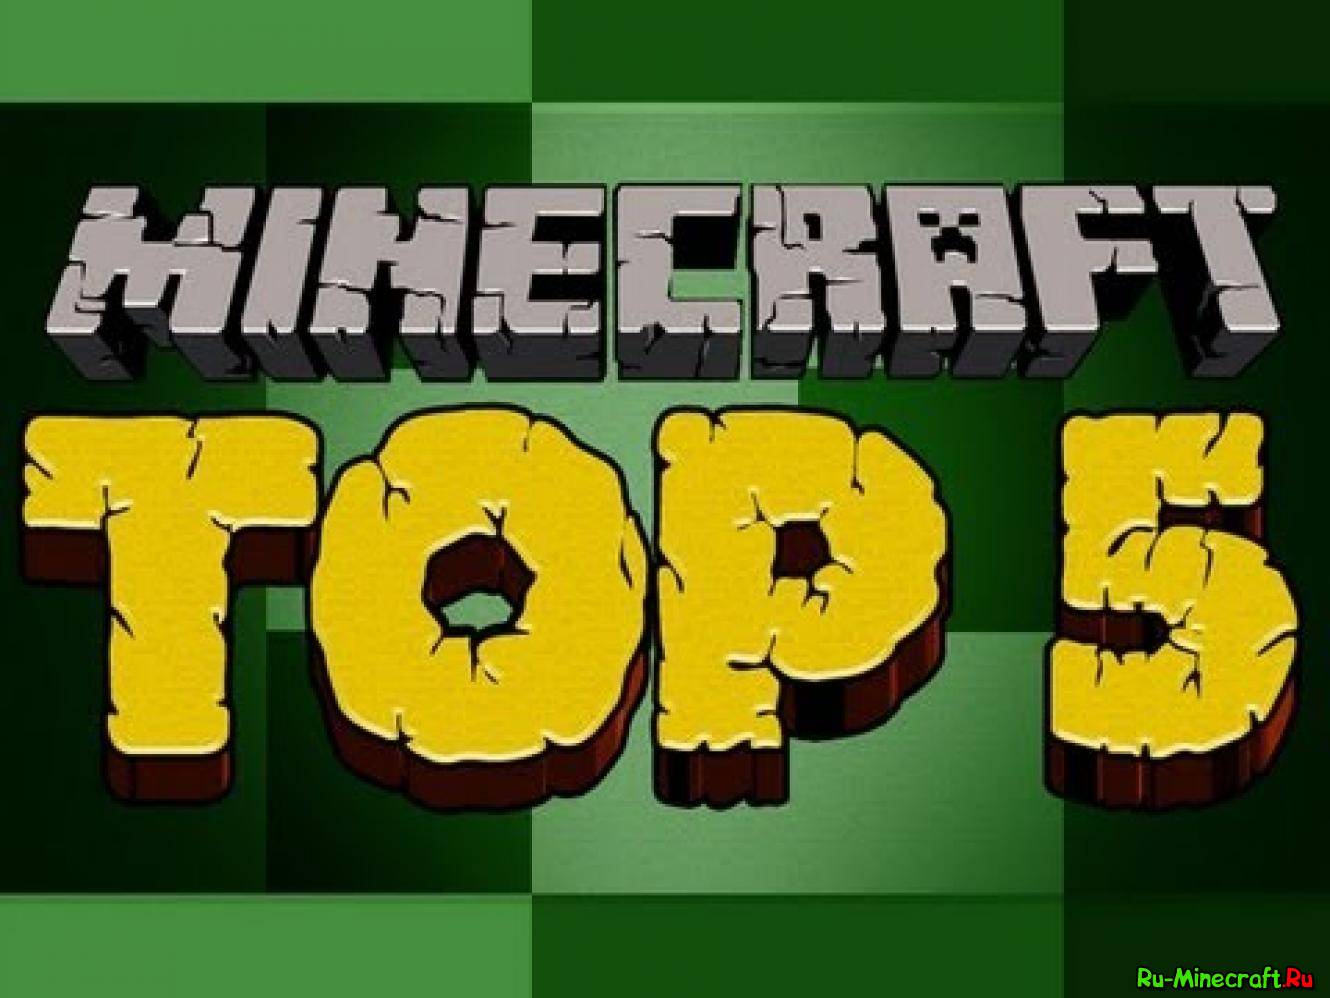 Video] Top 5 Minecraft Animations - 5 лучших анимаций Майнкрафта! » Видео  Minecraft, сериалы и приколы, майнкрафт анимации